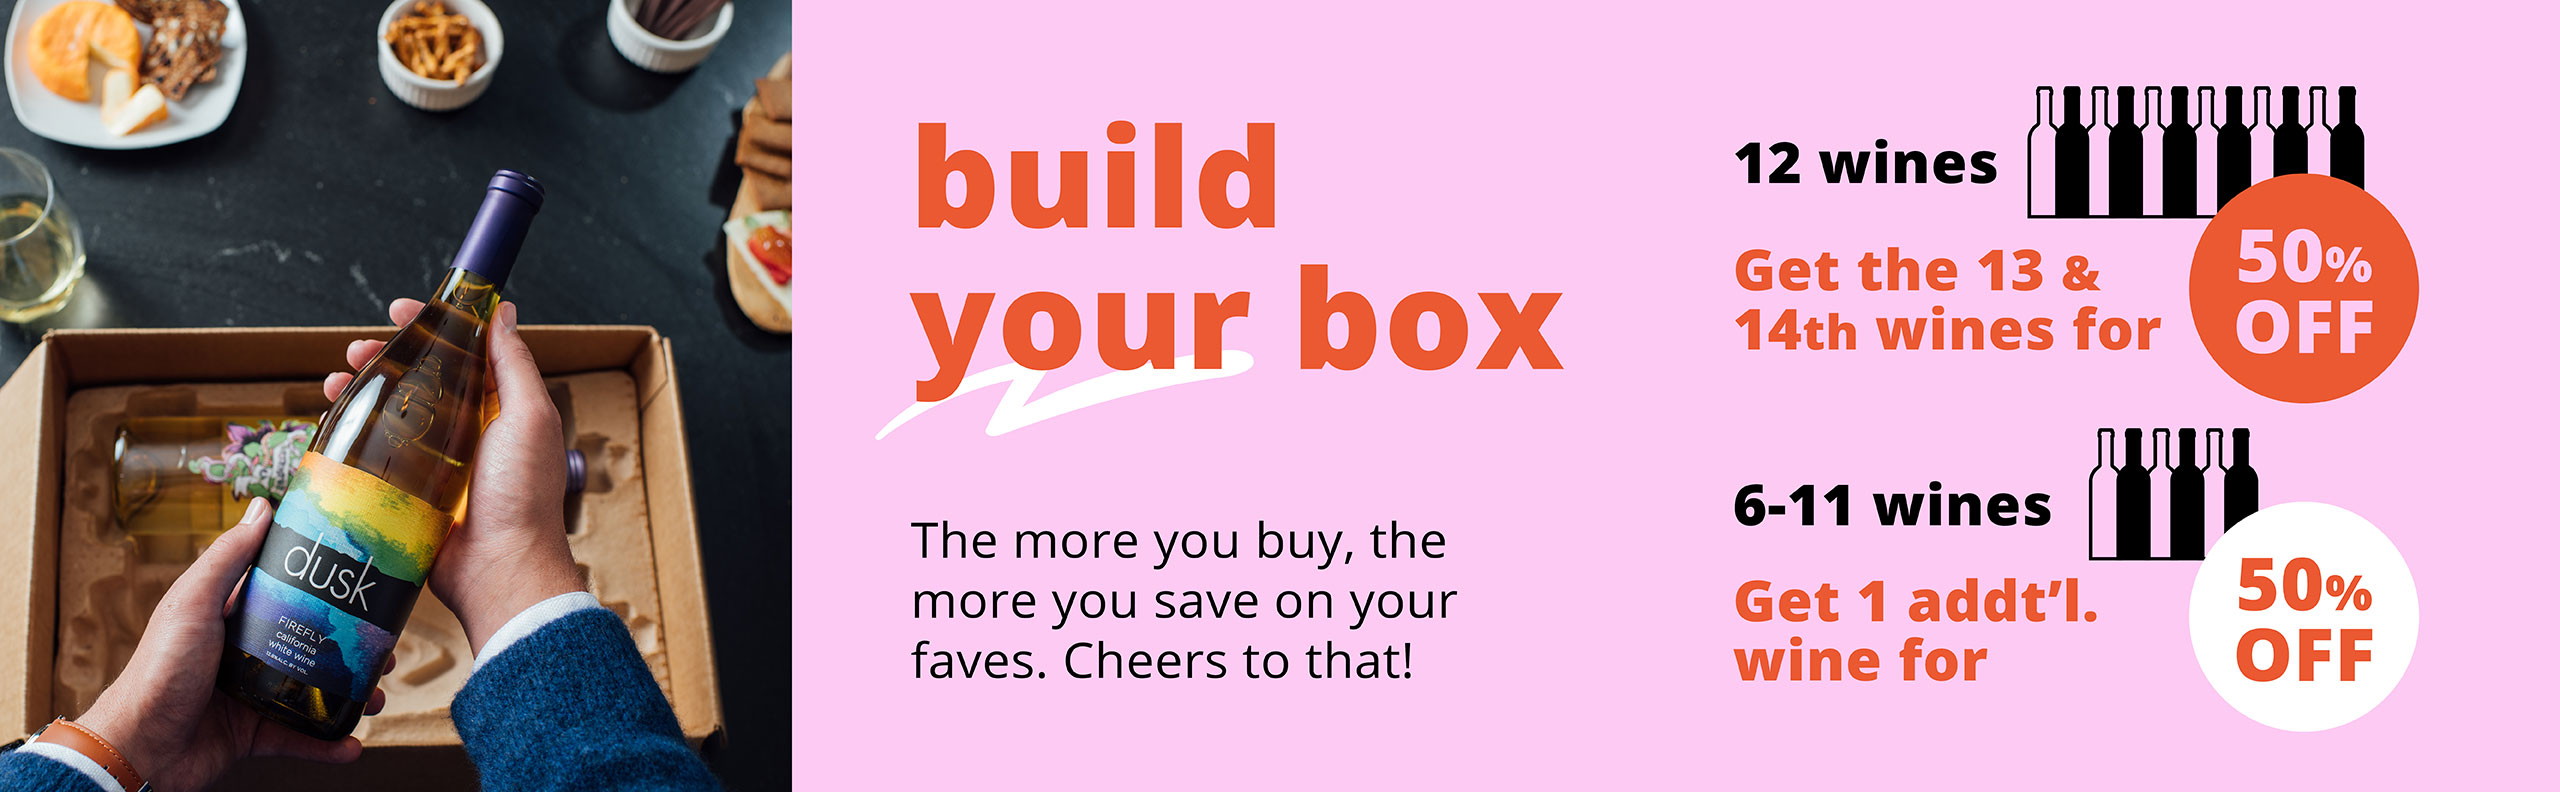 Build Your Box Wine Promos